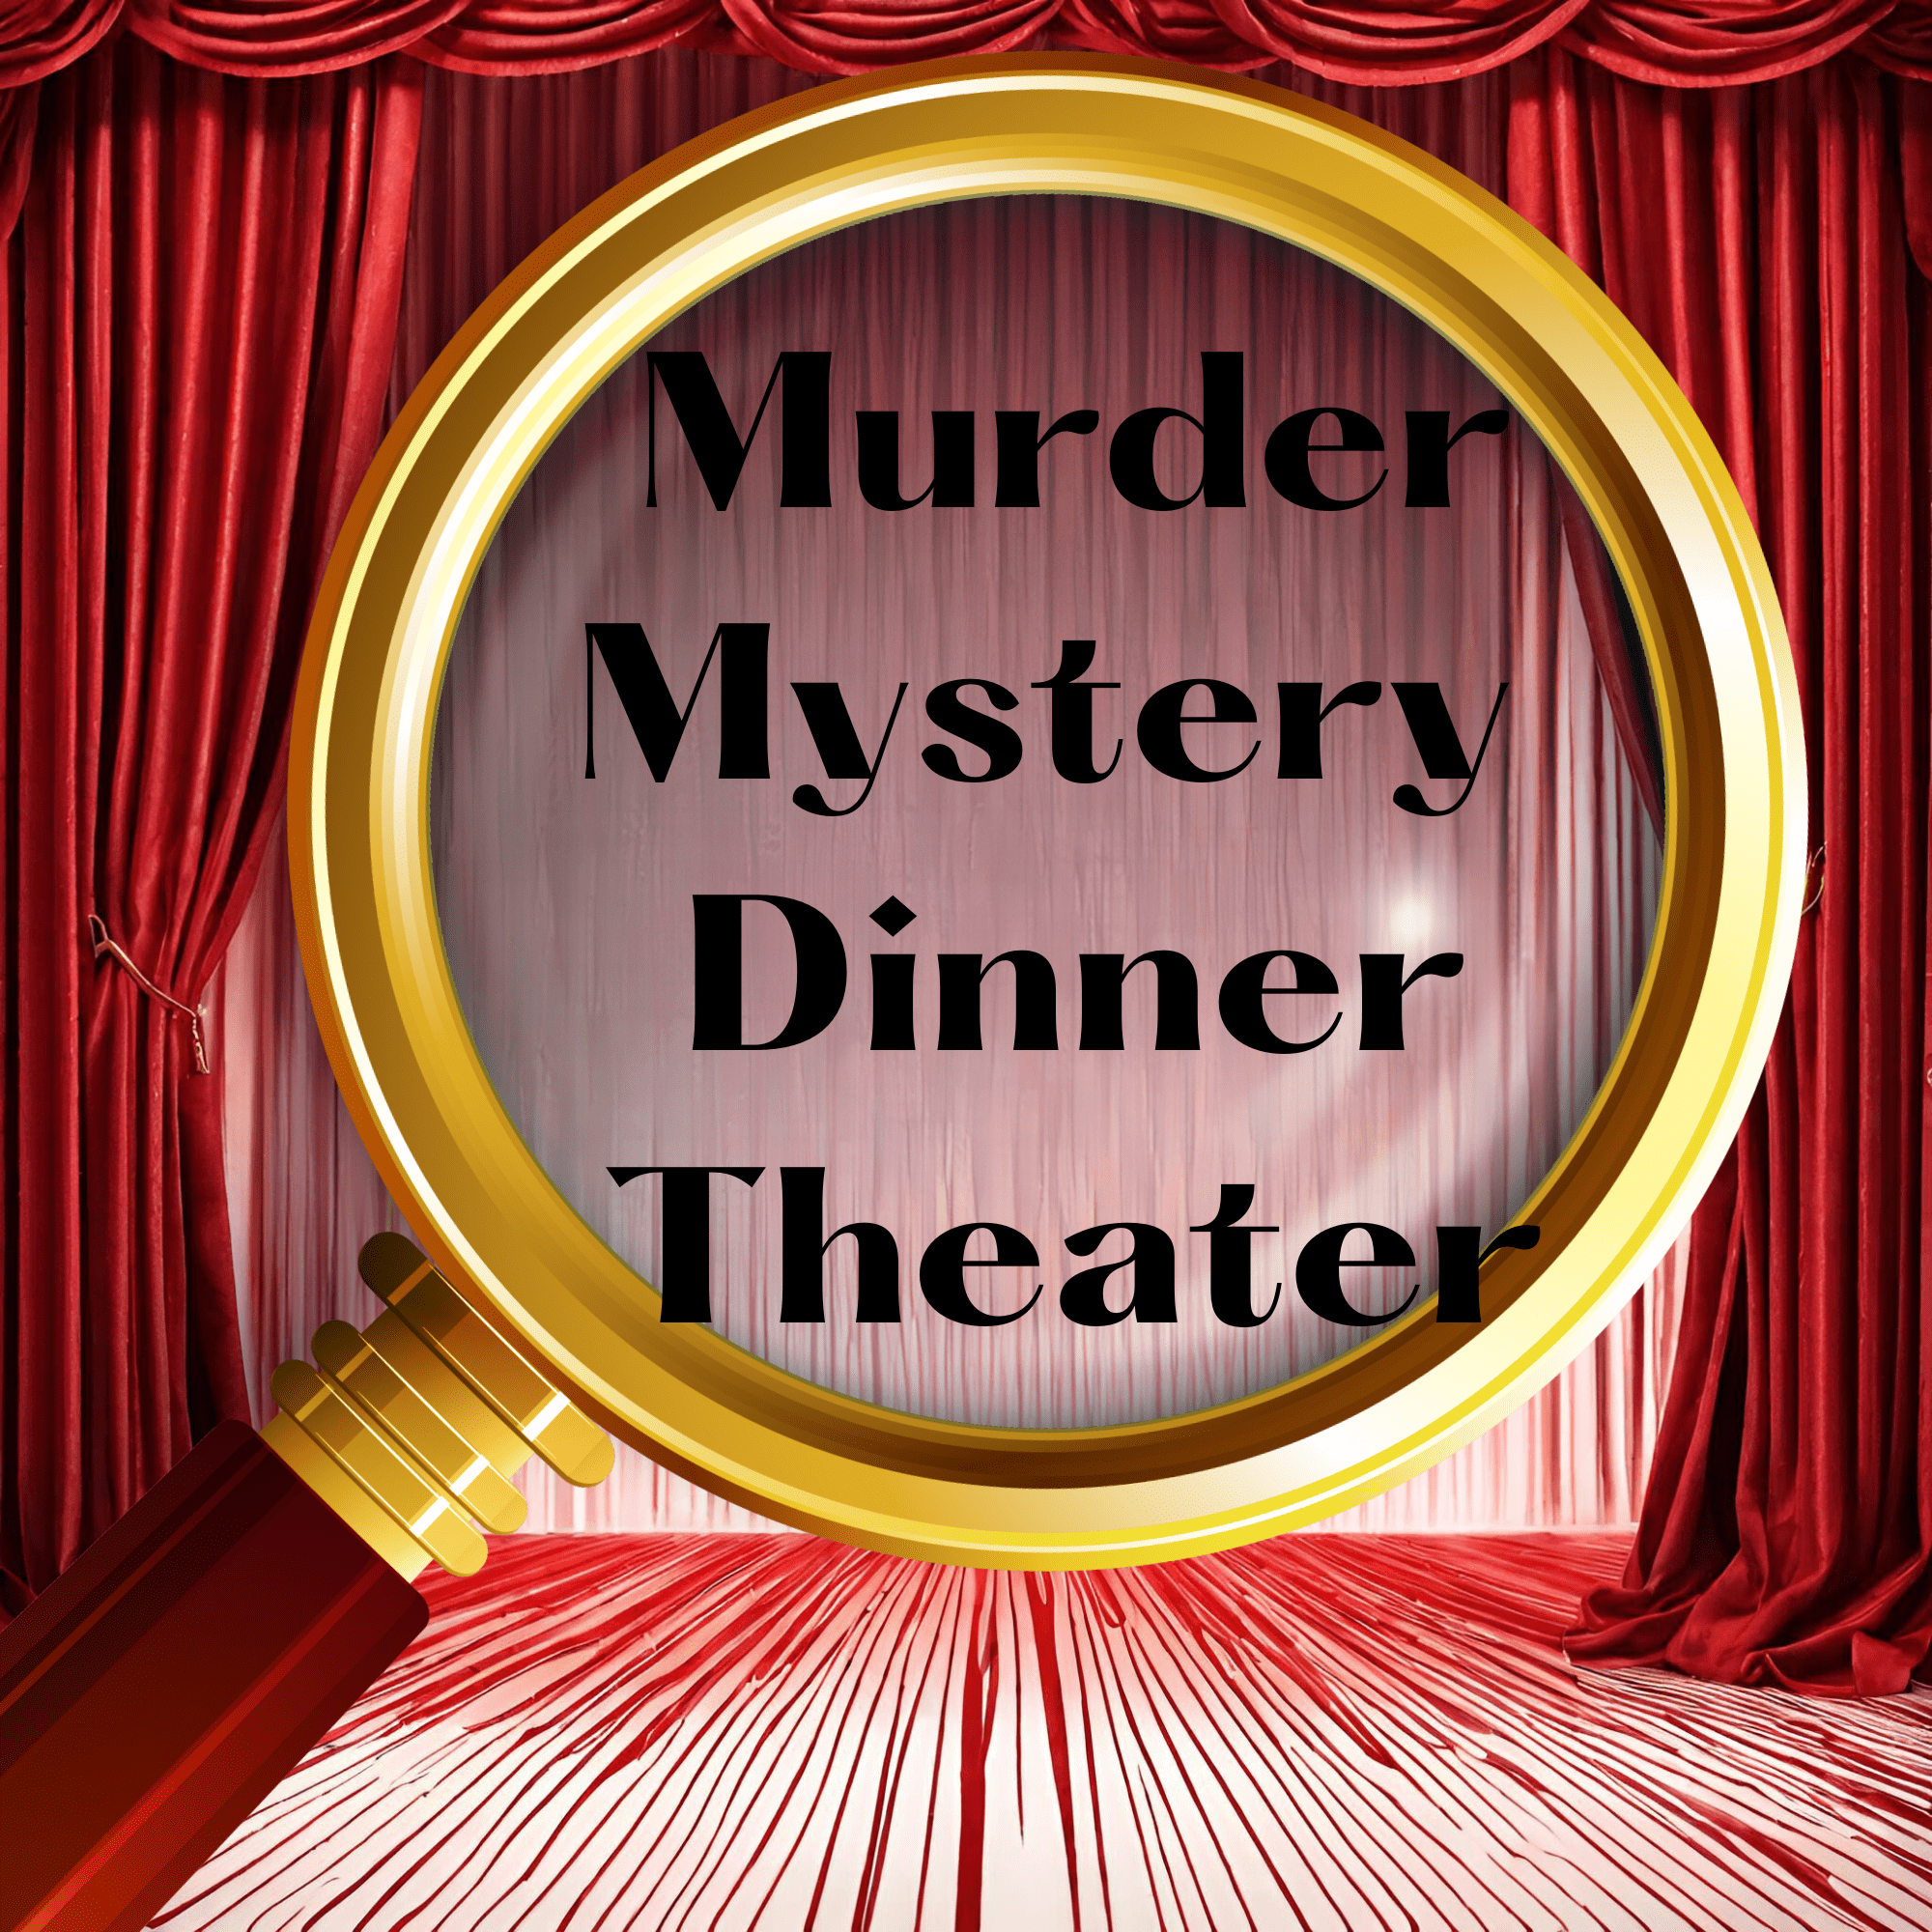 Murder Mystery Dinner Theater min